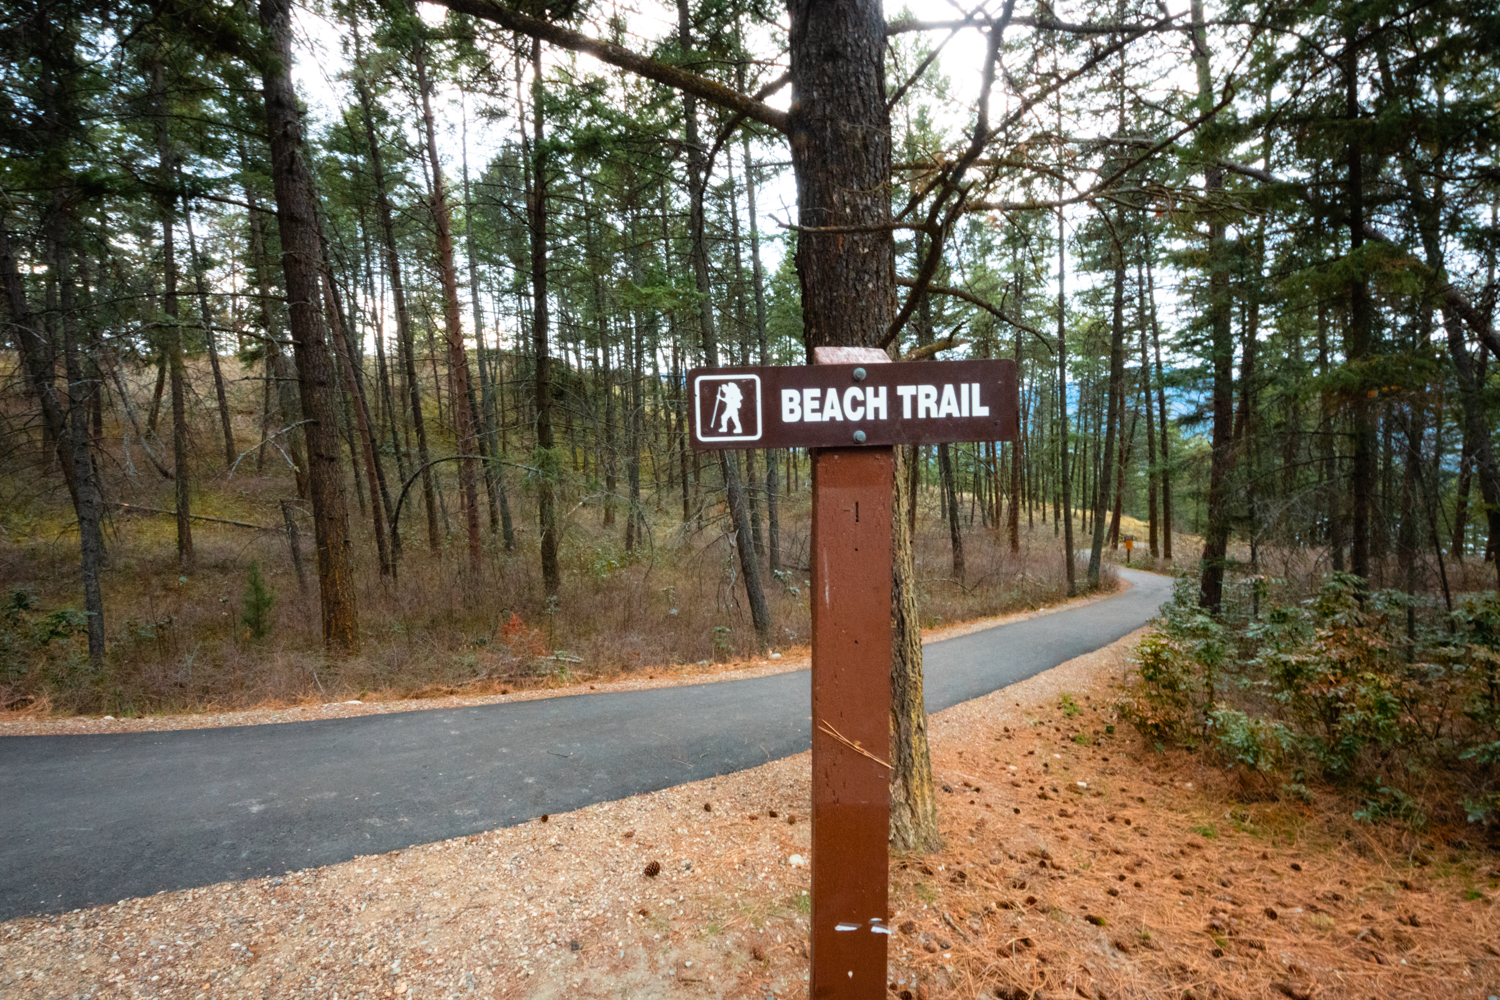 Hiking trail sign